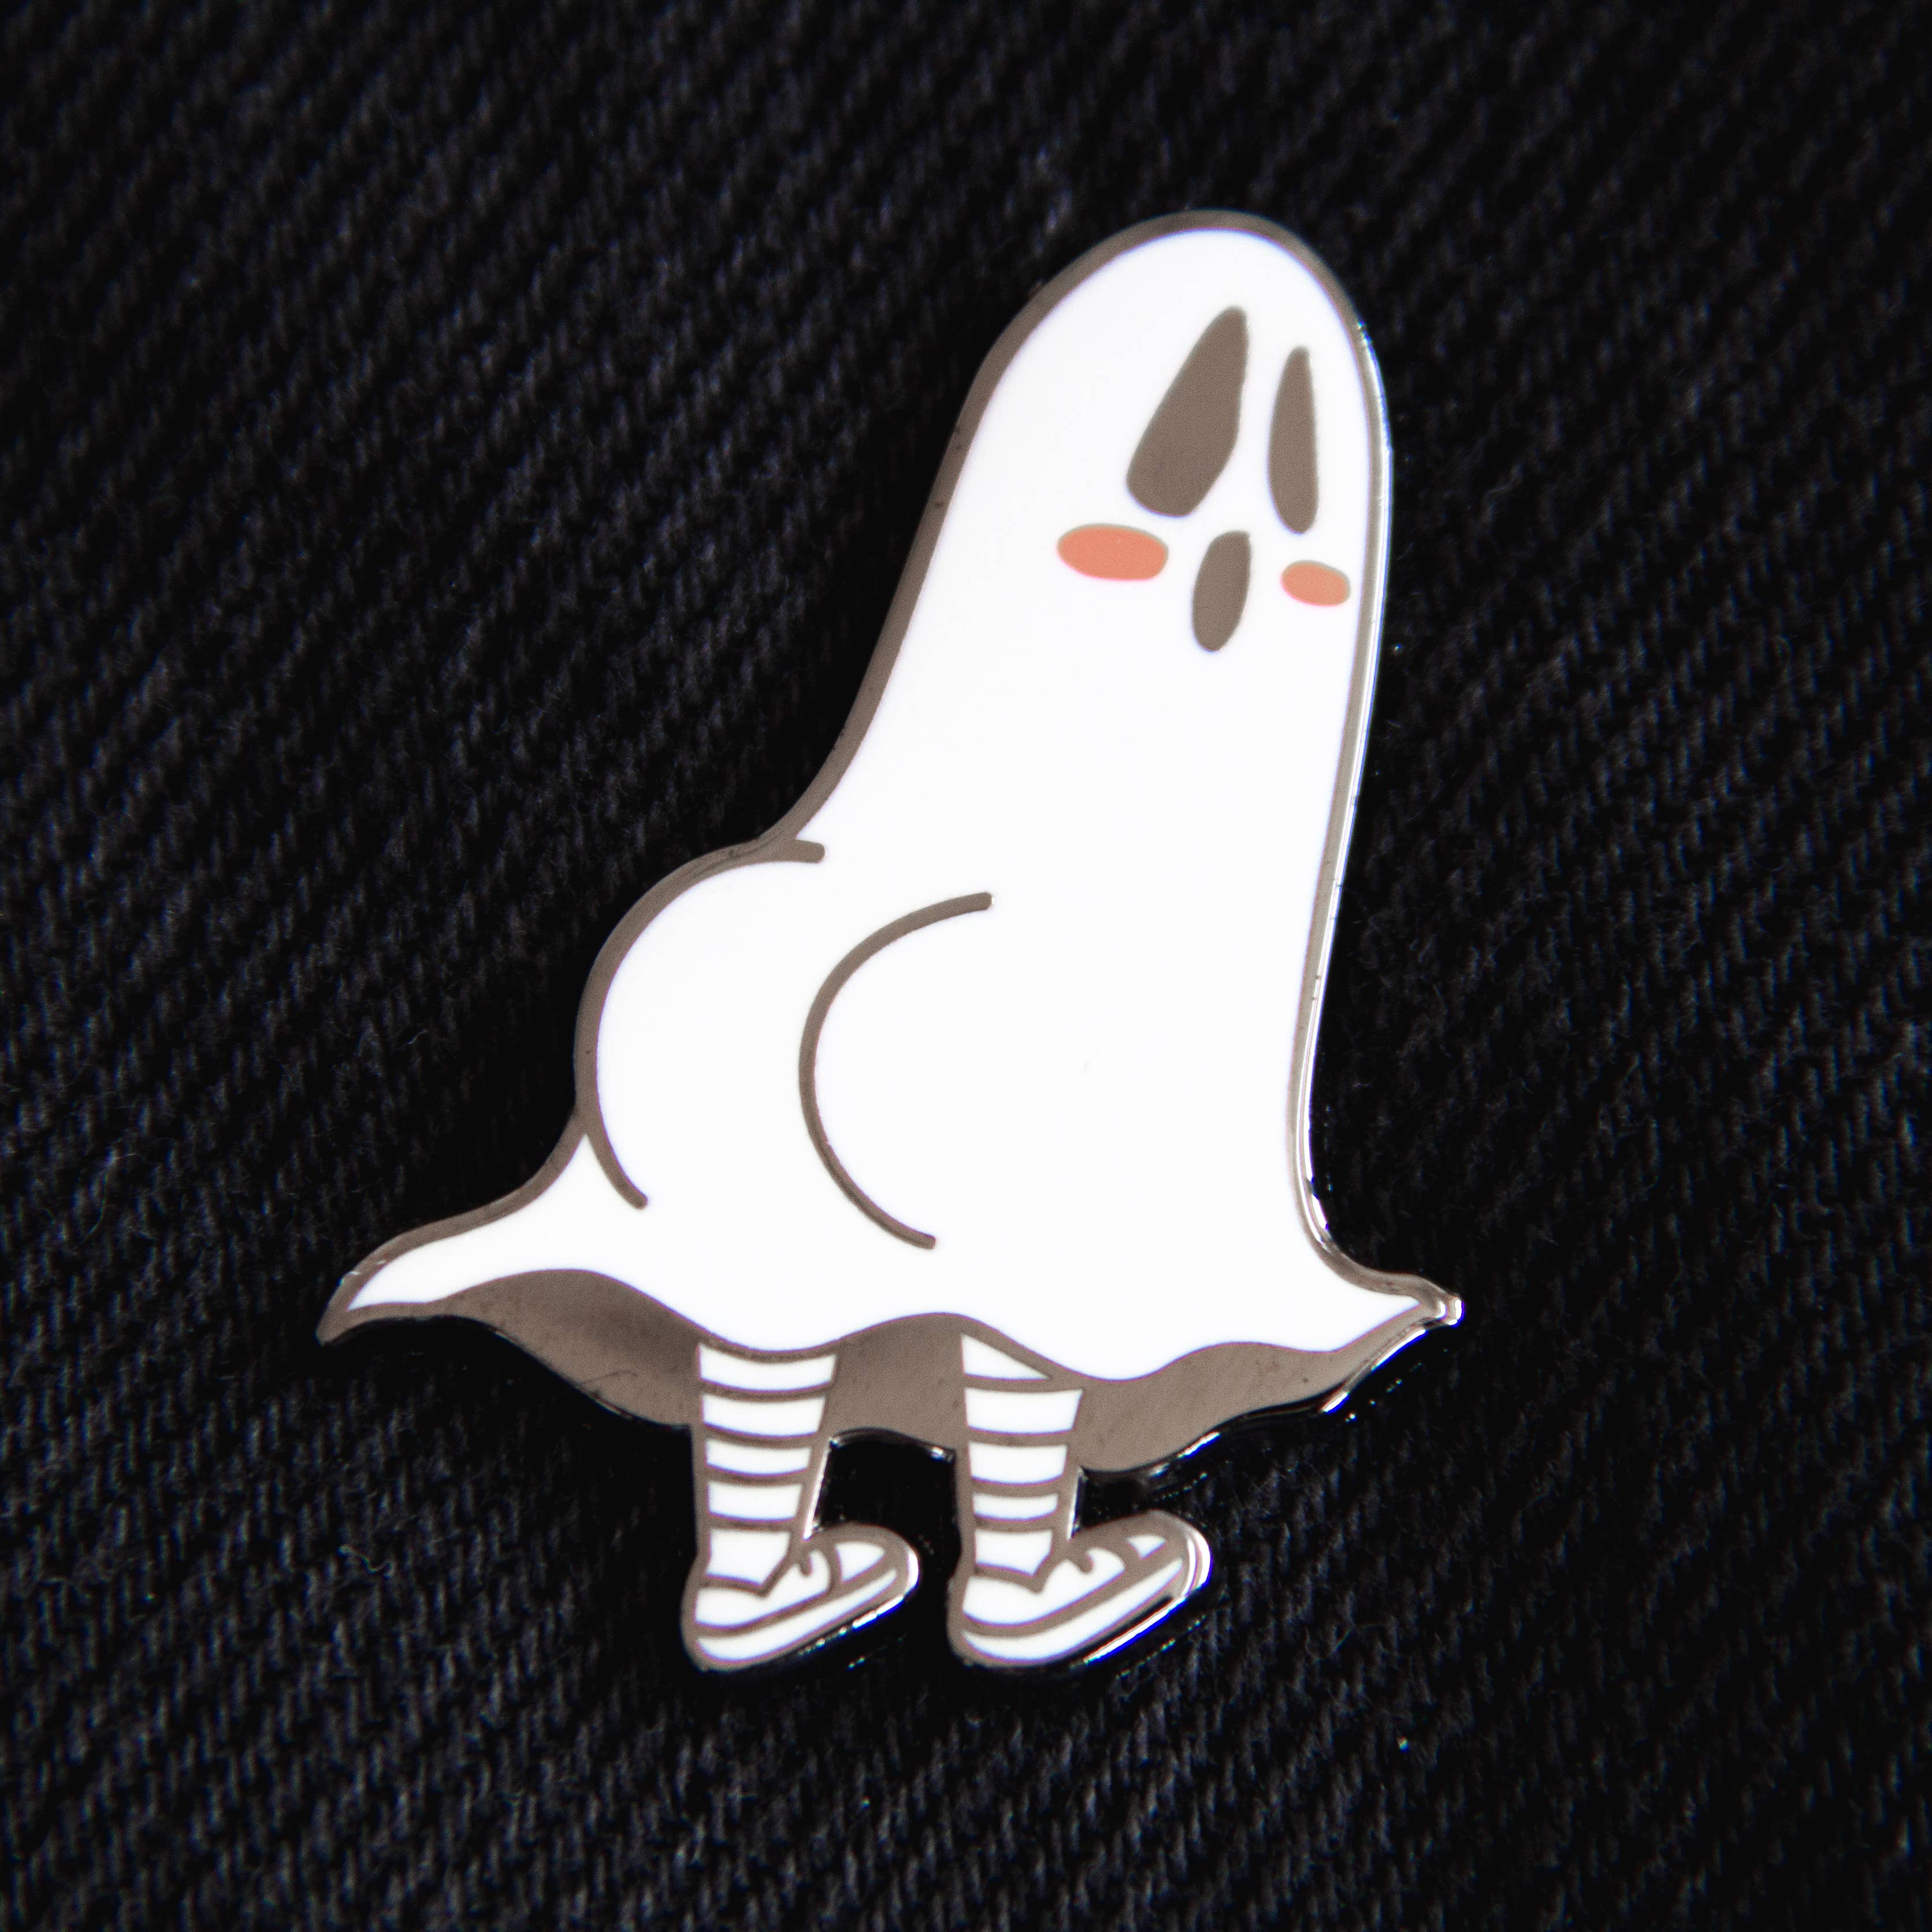 Booty Ghost Funny Spooky Enamel Pin Accessory